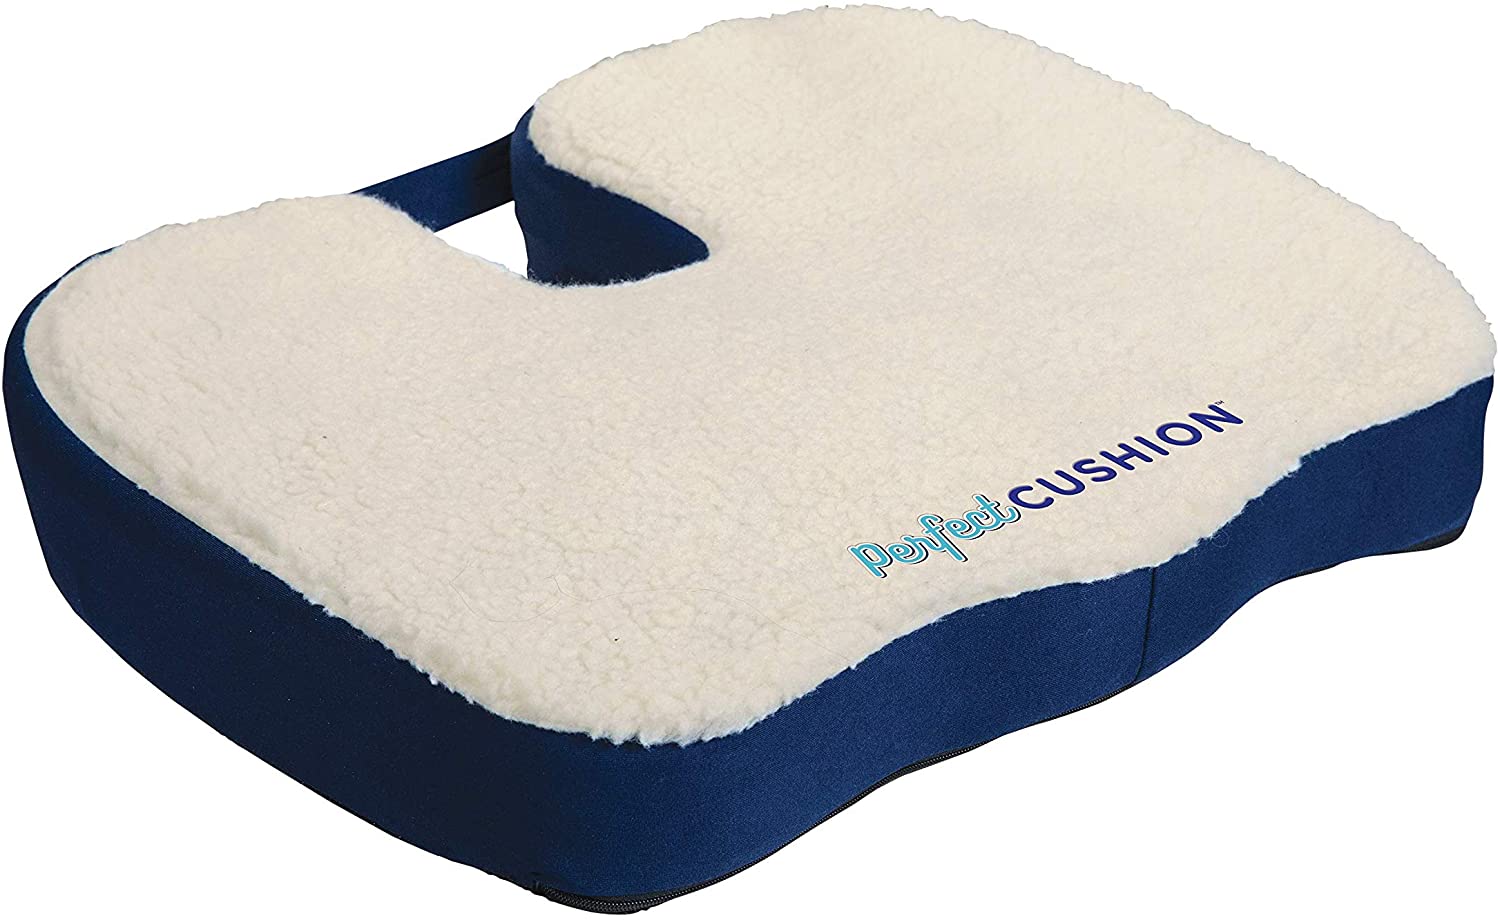 Memory Plus Cushion - Home Health Store Inc